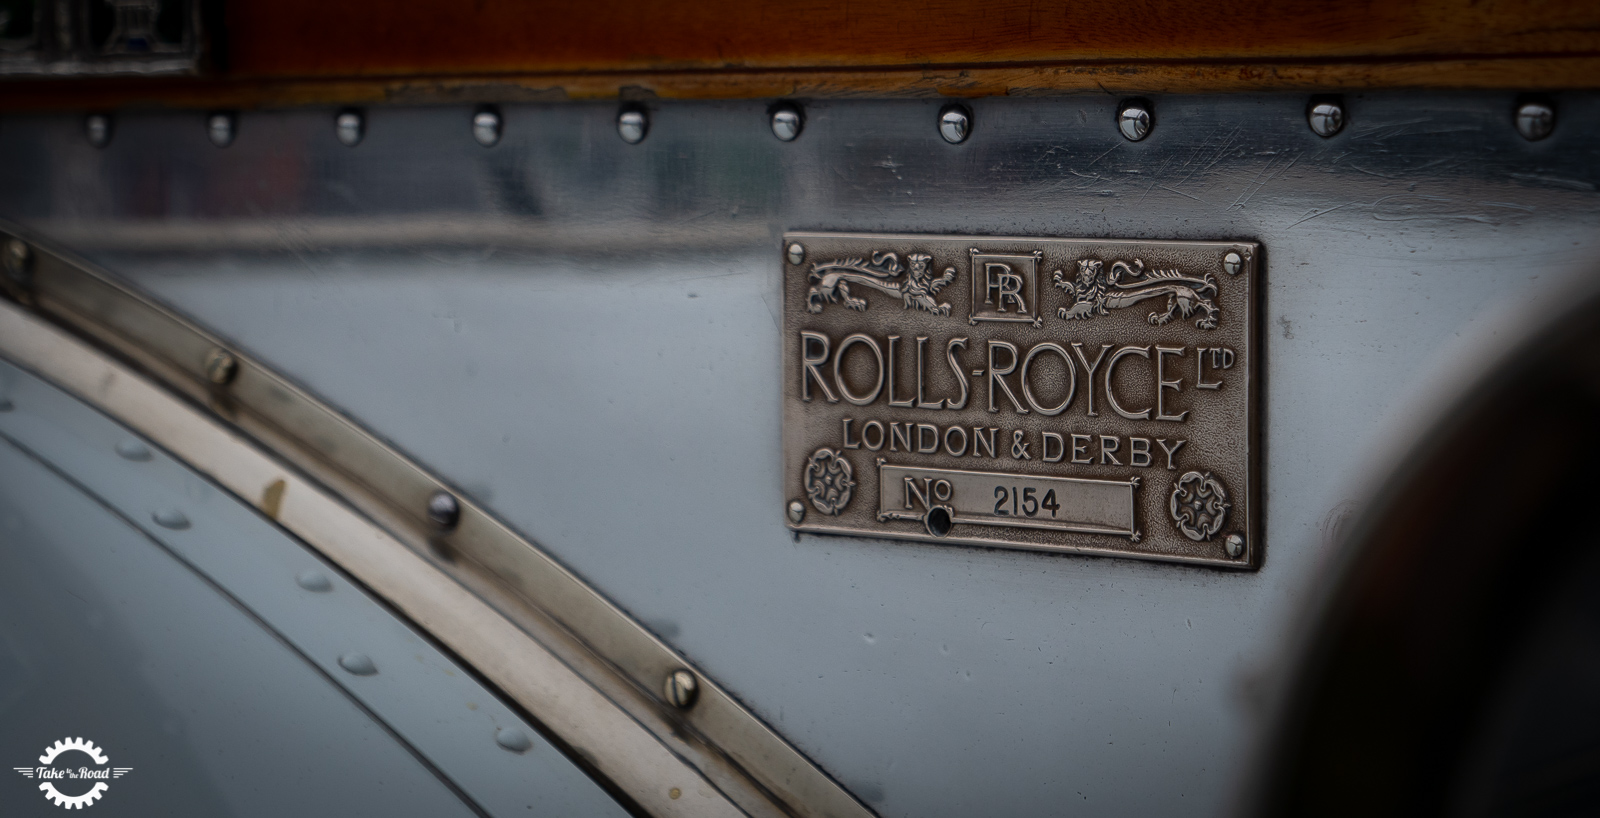 Rolls-Royce remembers founders pioneering flight in 1910